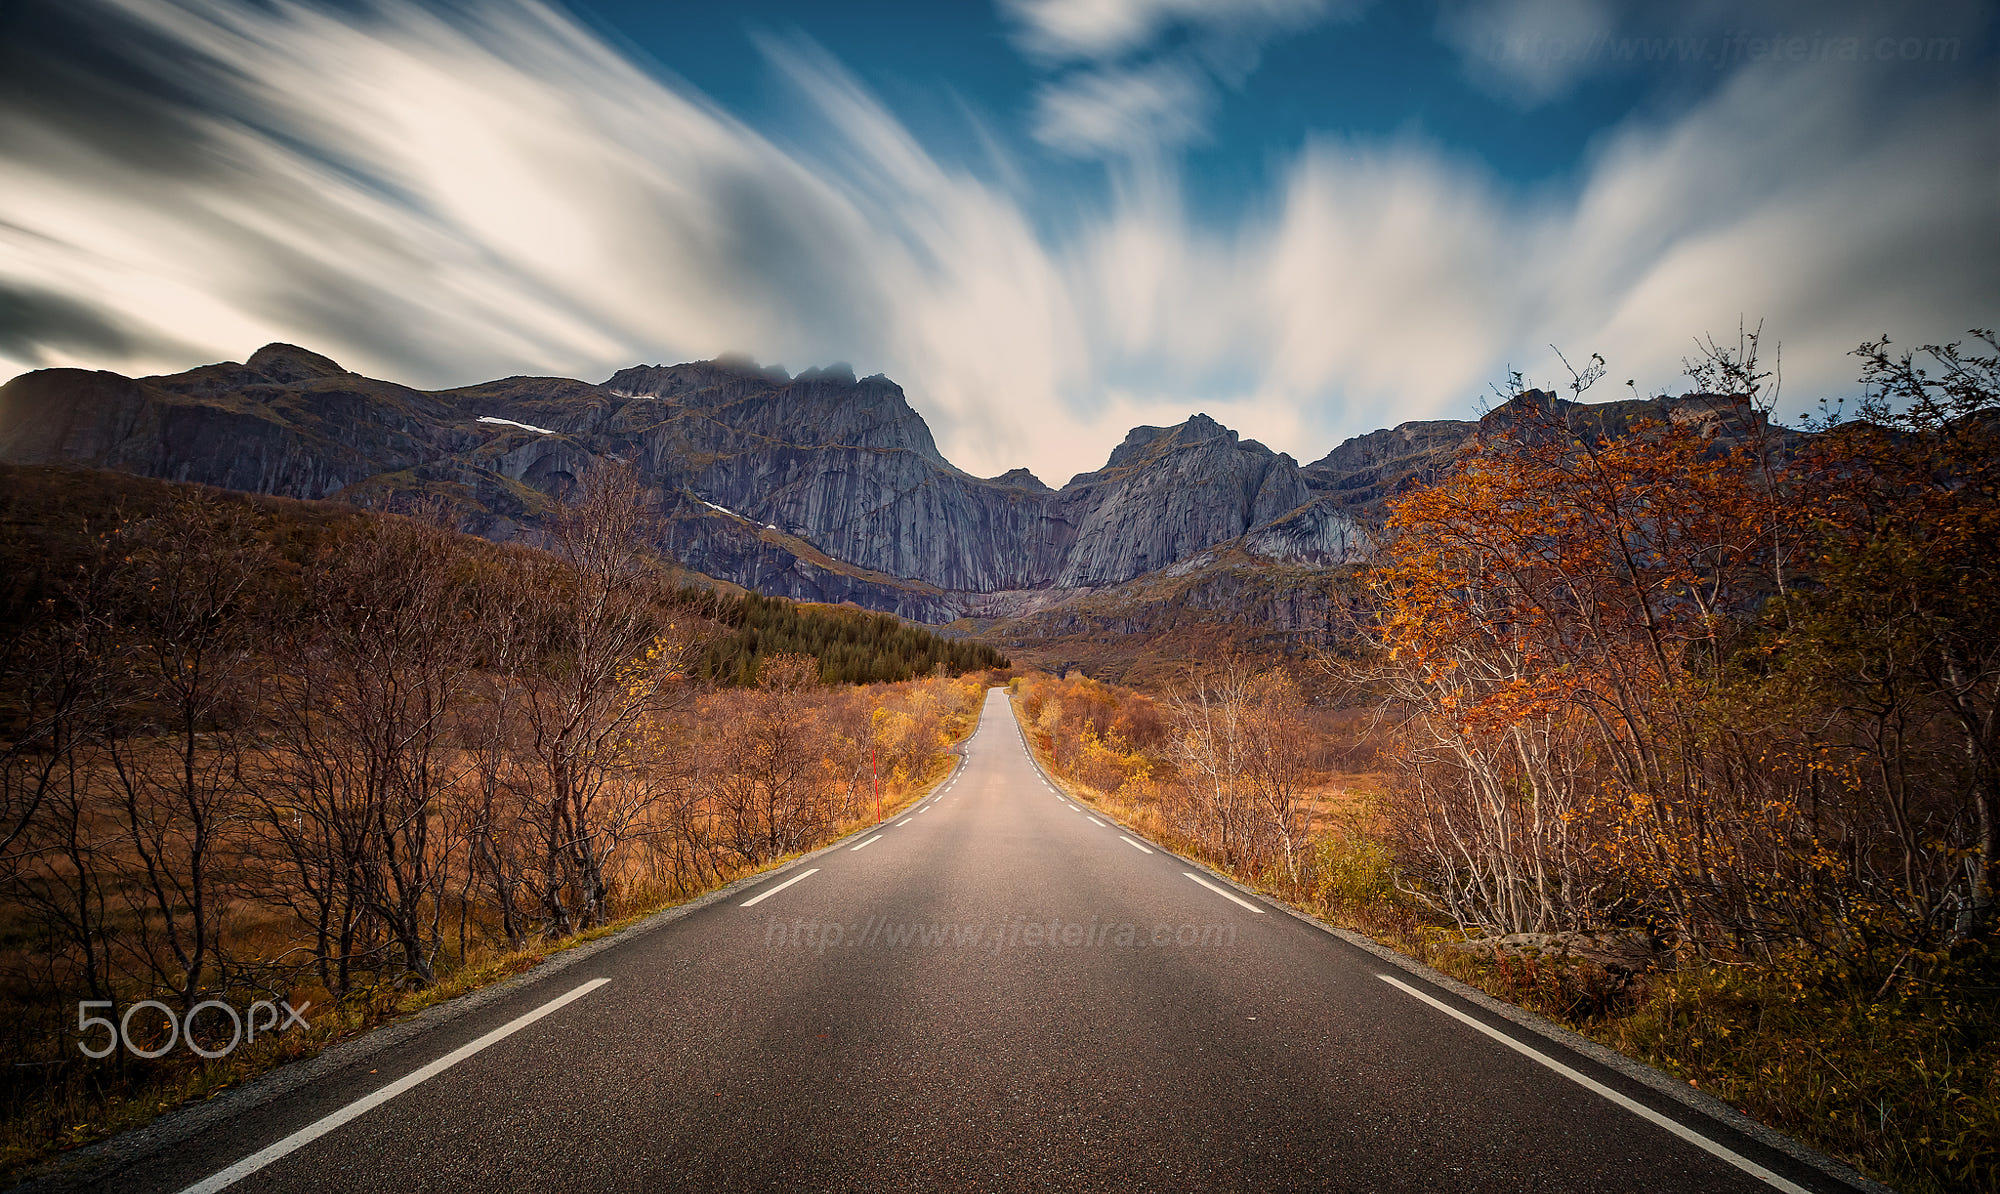 The autumn road